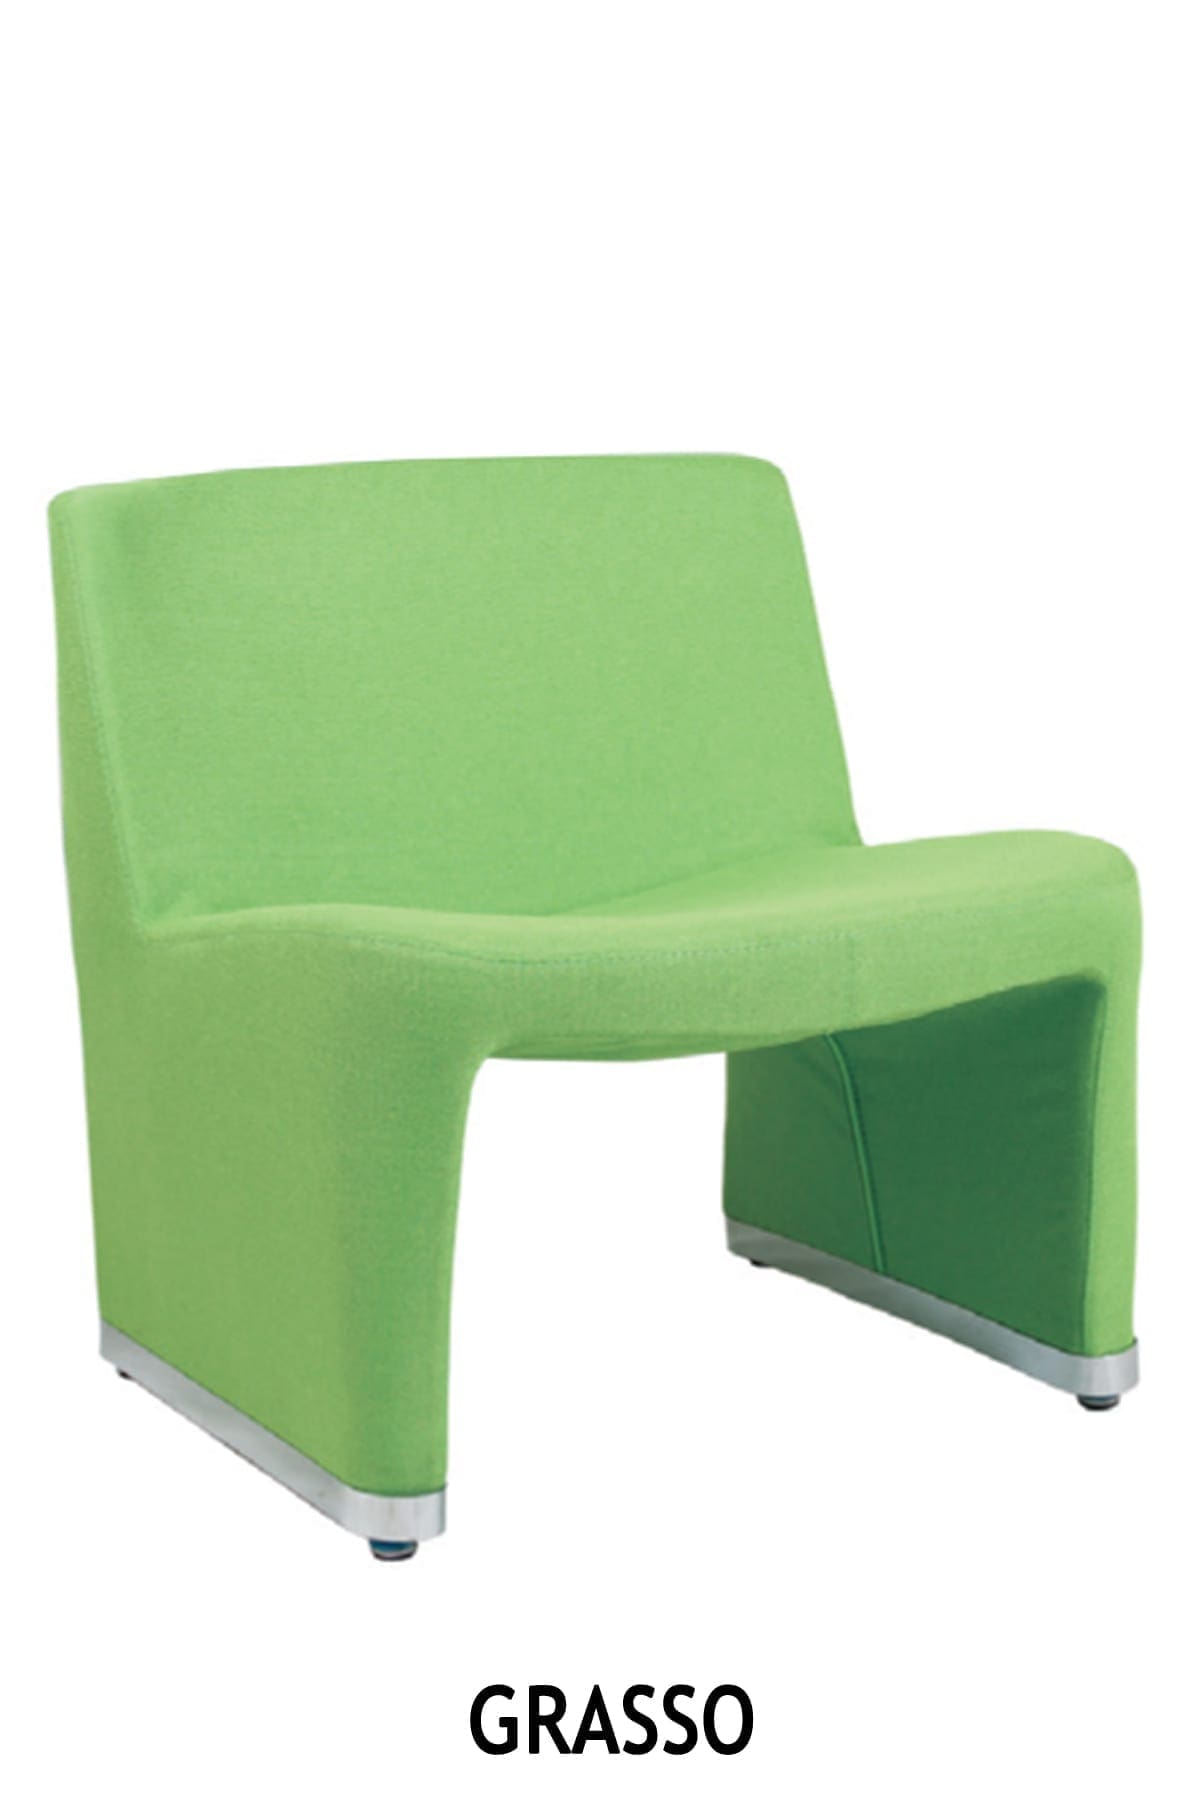 Chairman Kursi Sofa type GRASSO | Subur Furniture Online Store